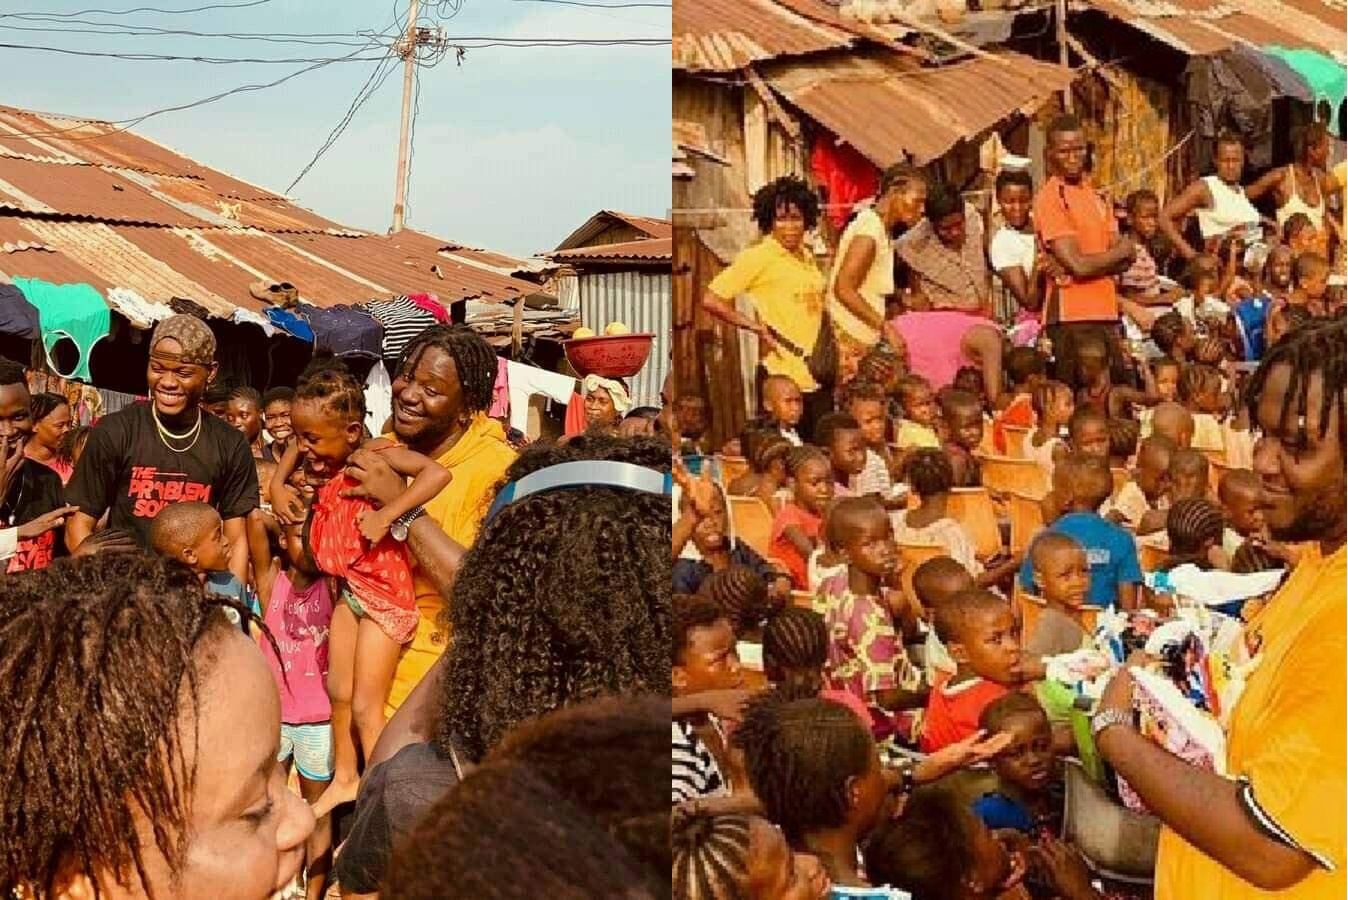 Popular Sierra Leonean Artiste, Cool J Feeds Over 400 Children in Kroo Bay